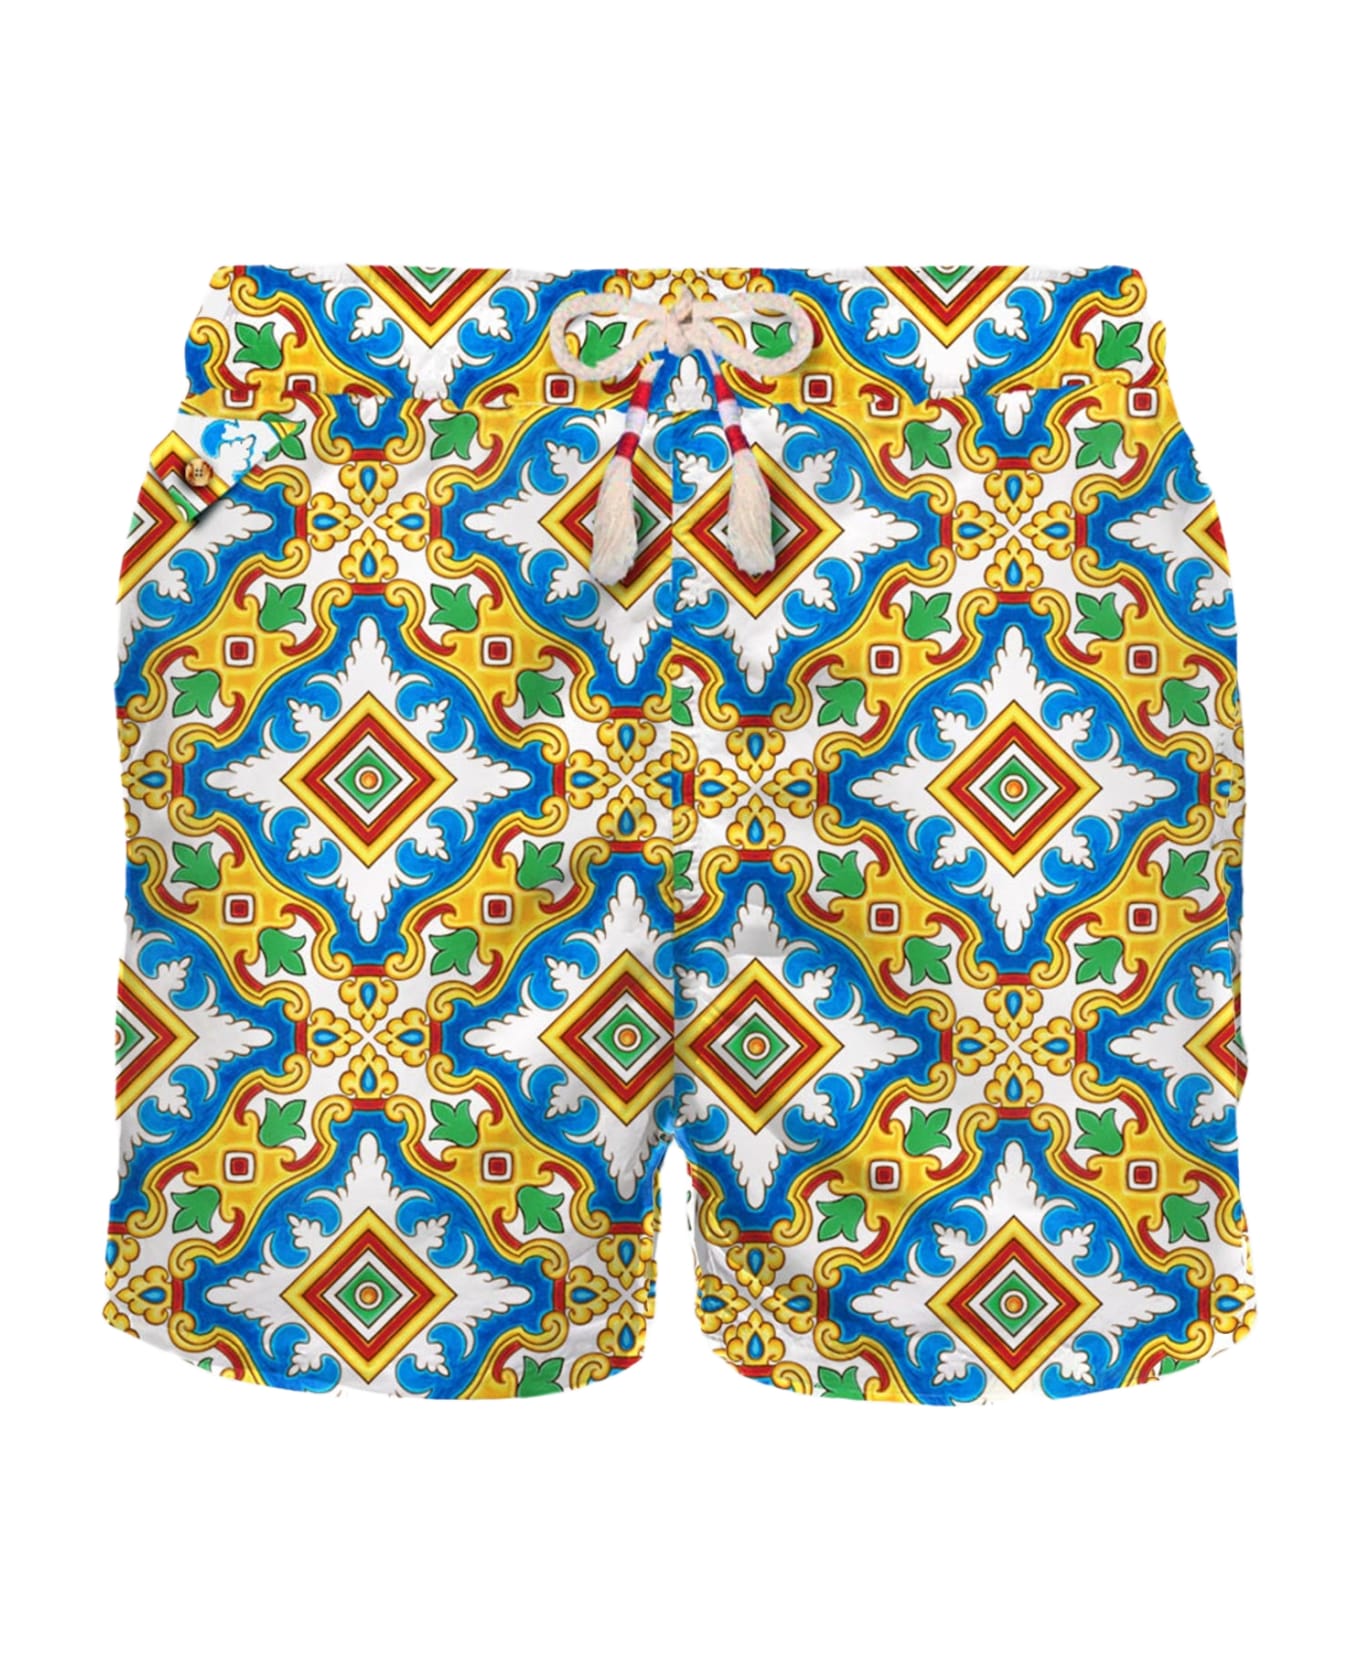 MC2 Saint Barth Man Light Fabric Swim Shorts With Maiolica Print - WHITE スイムトランクス